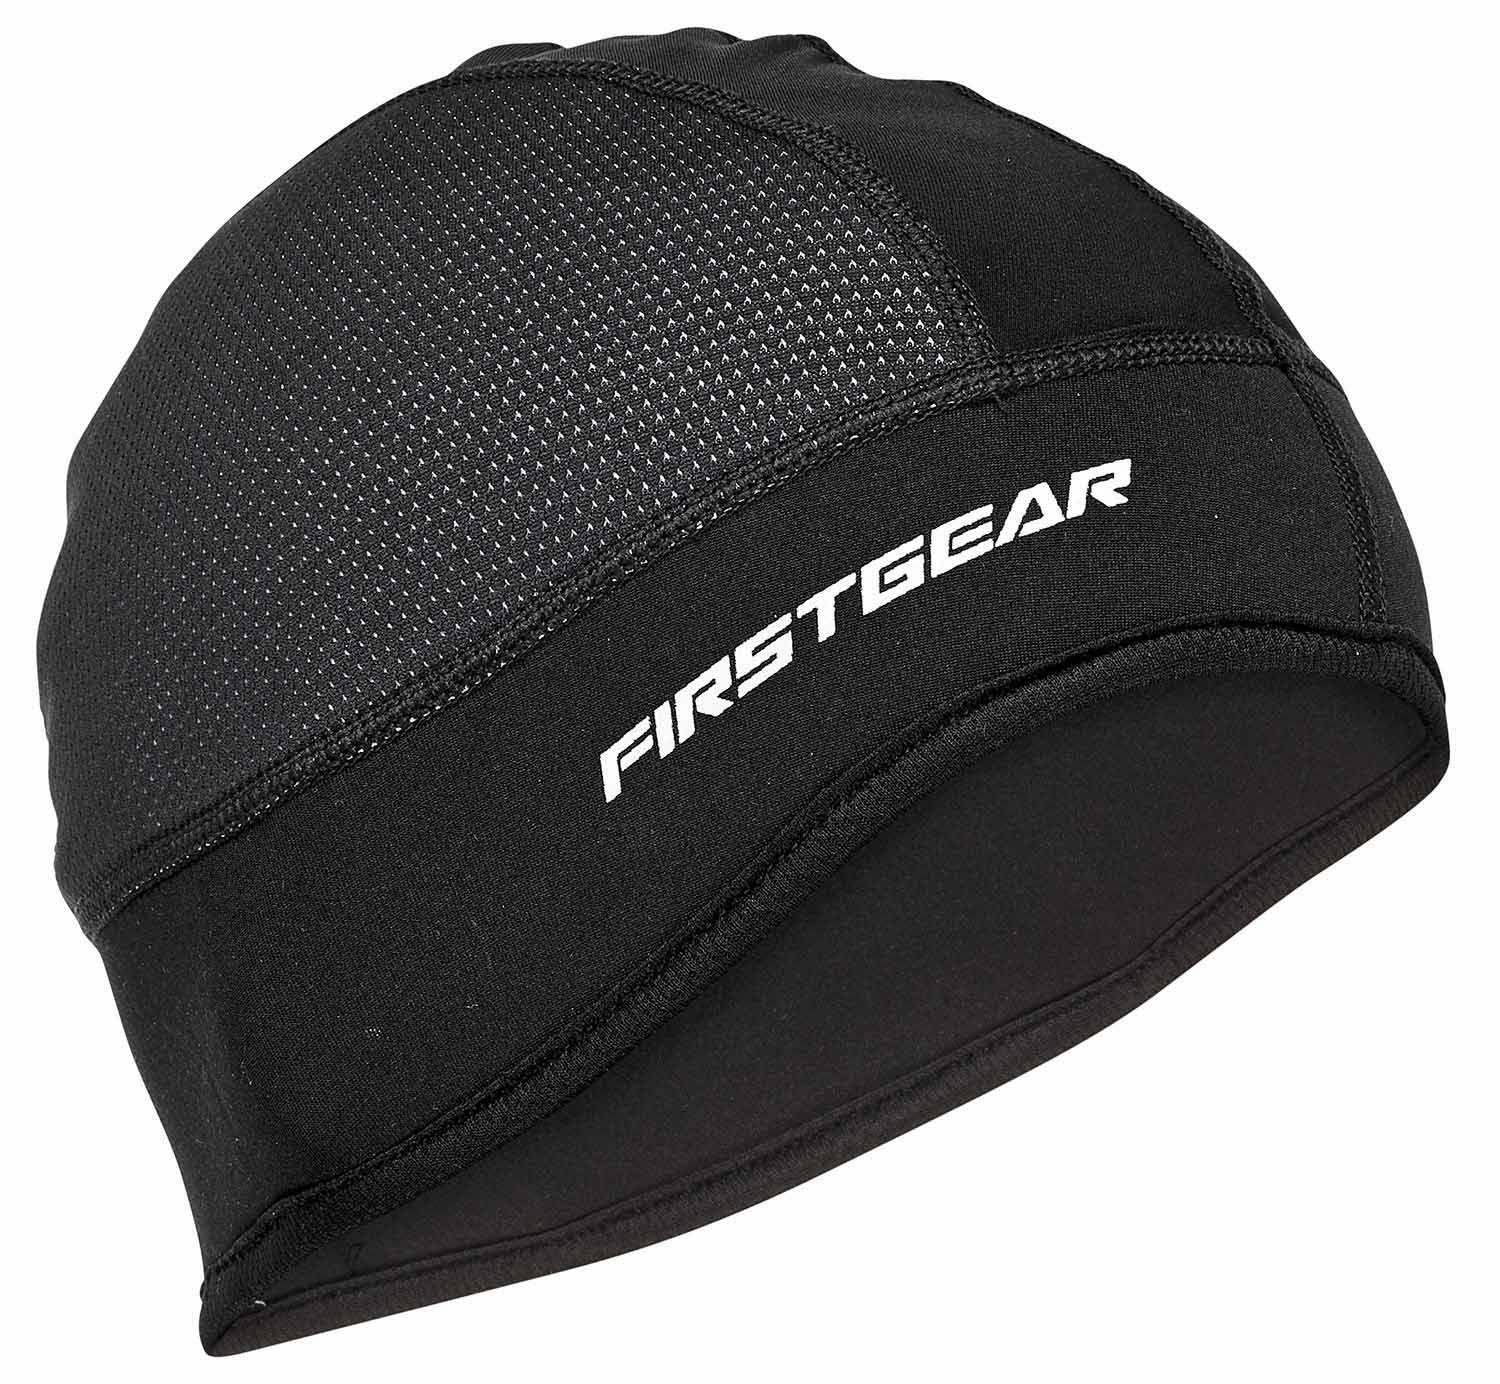 Prevent helmet hair with a skull cap from Firstgear.